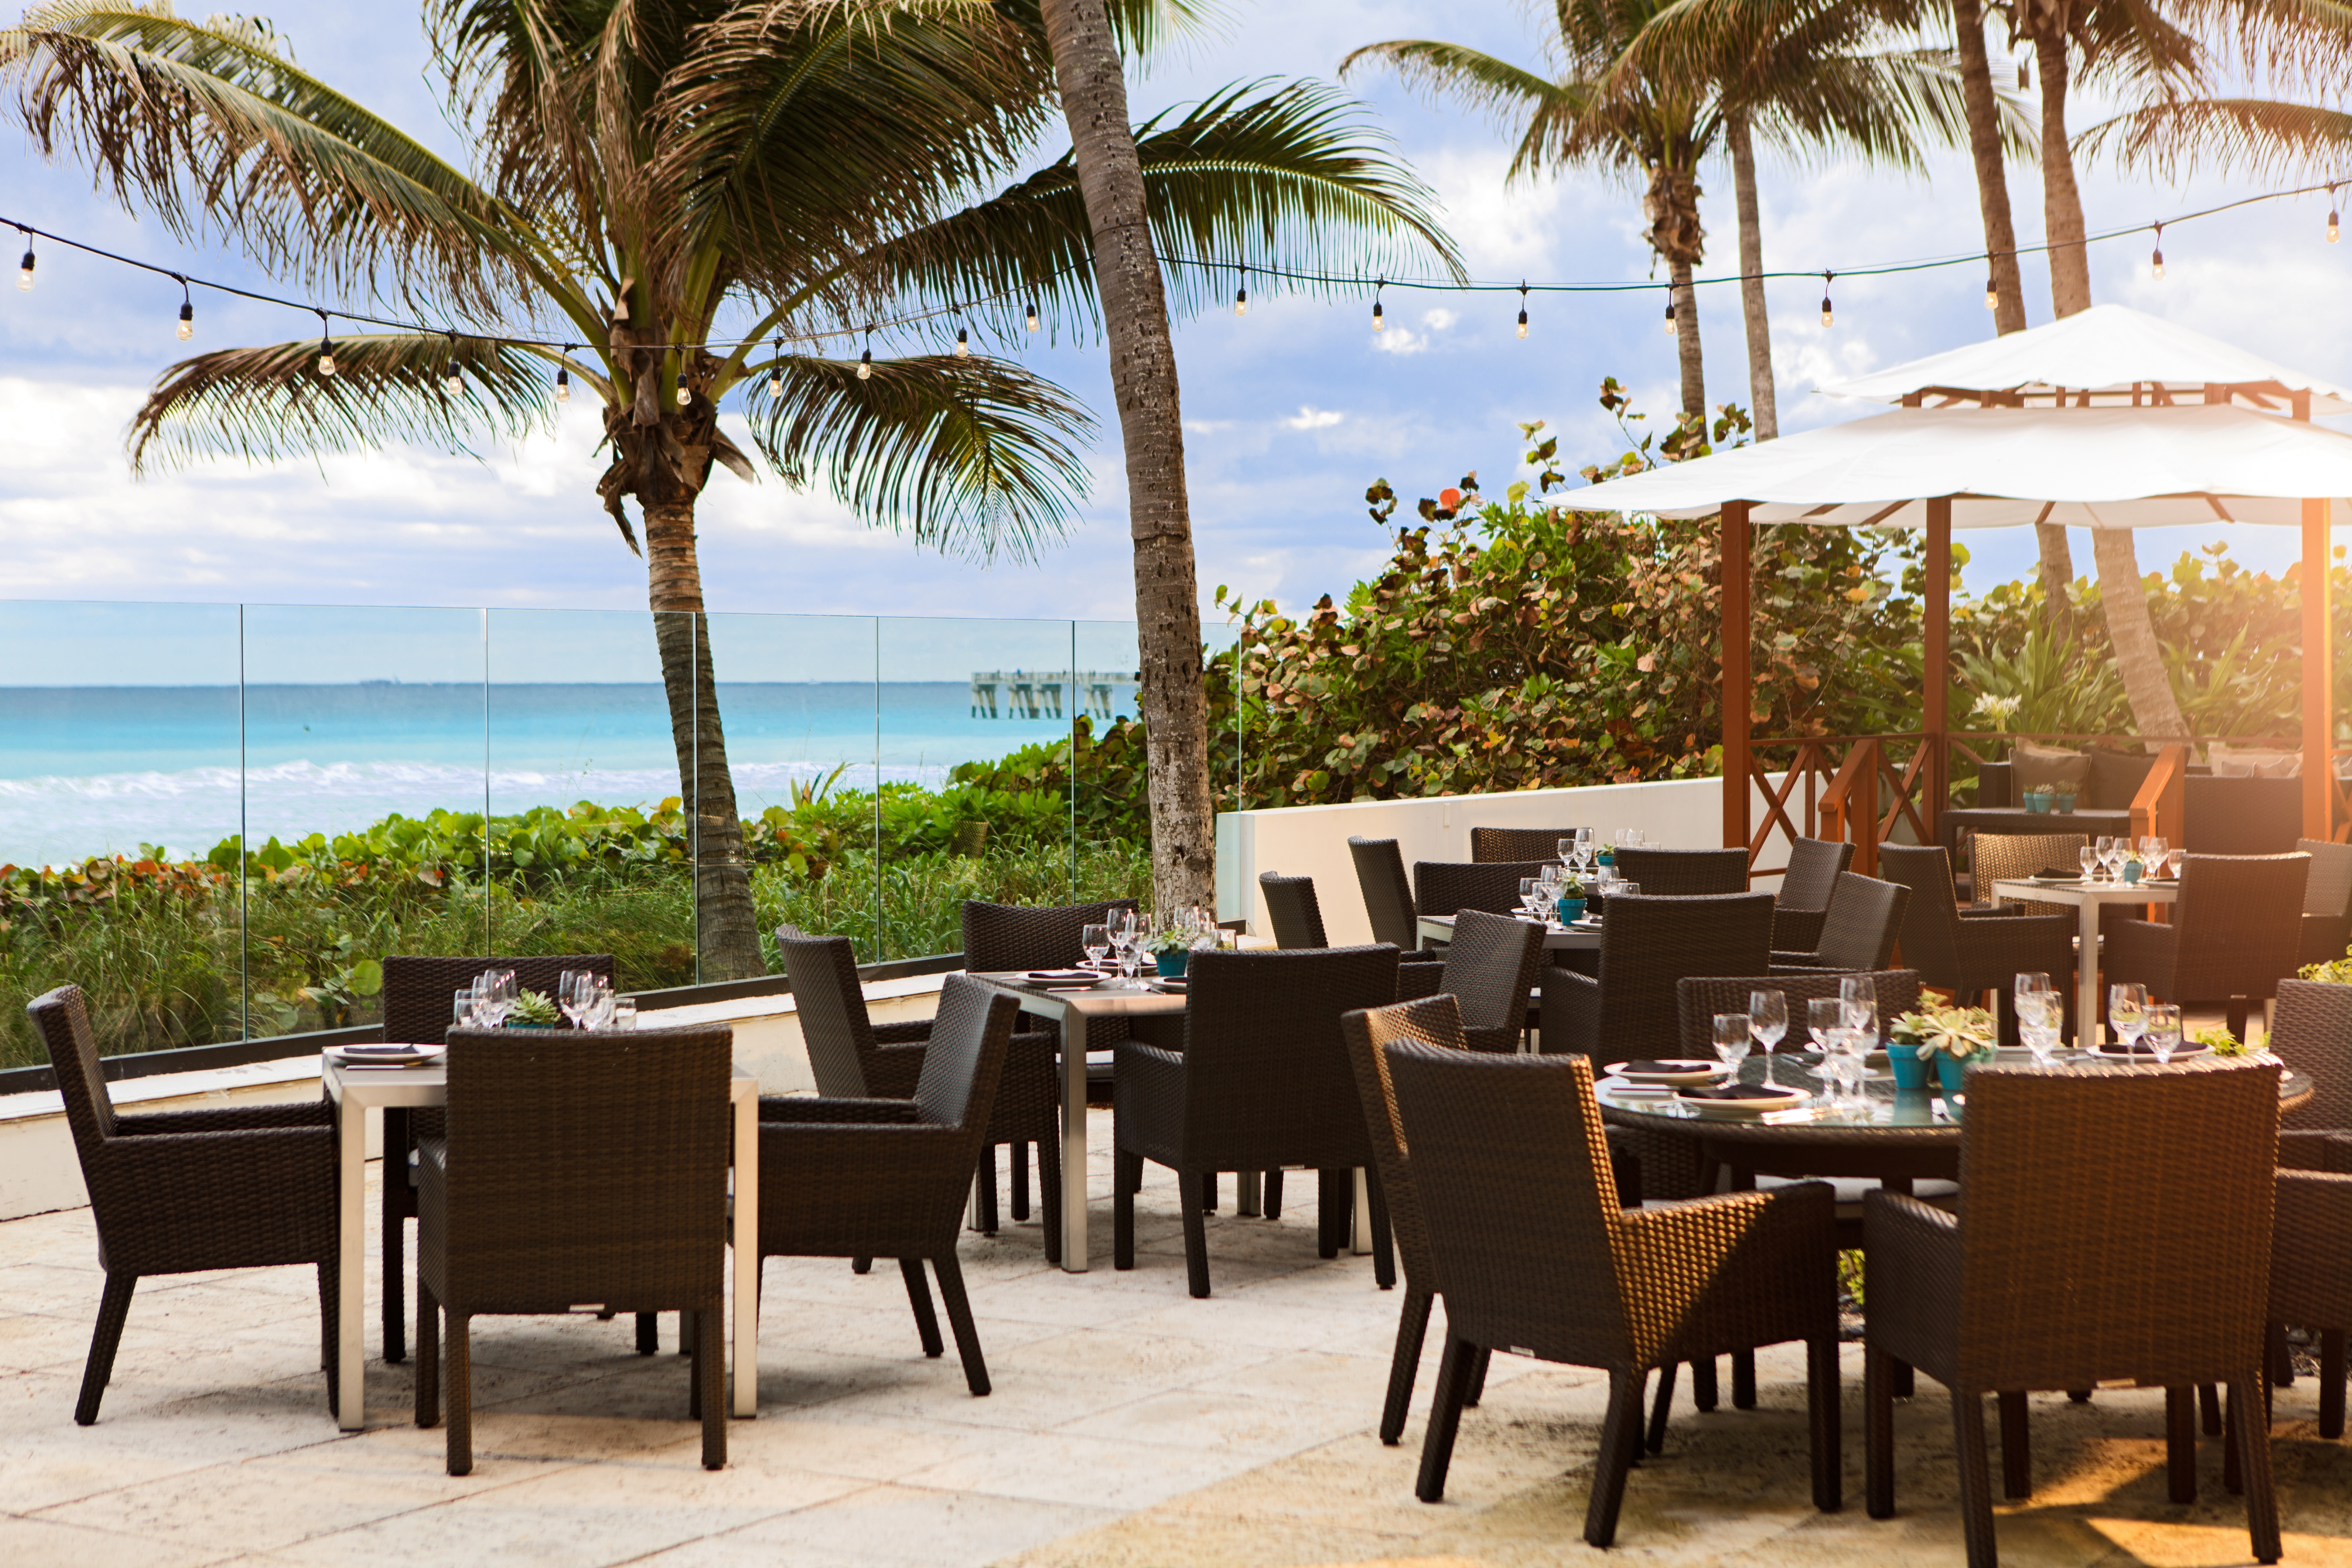 The oceanfront terrace at Brandon's Palm Beach